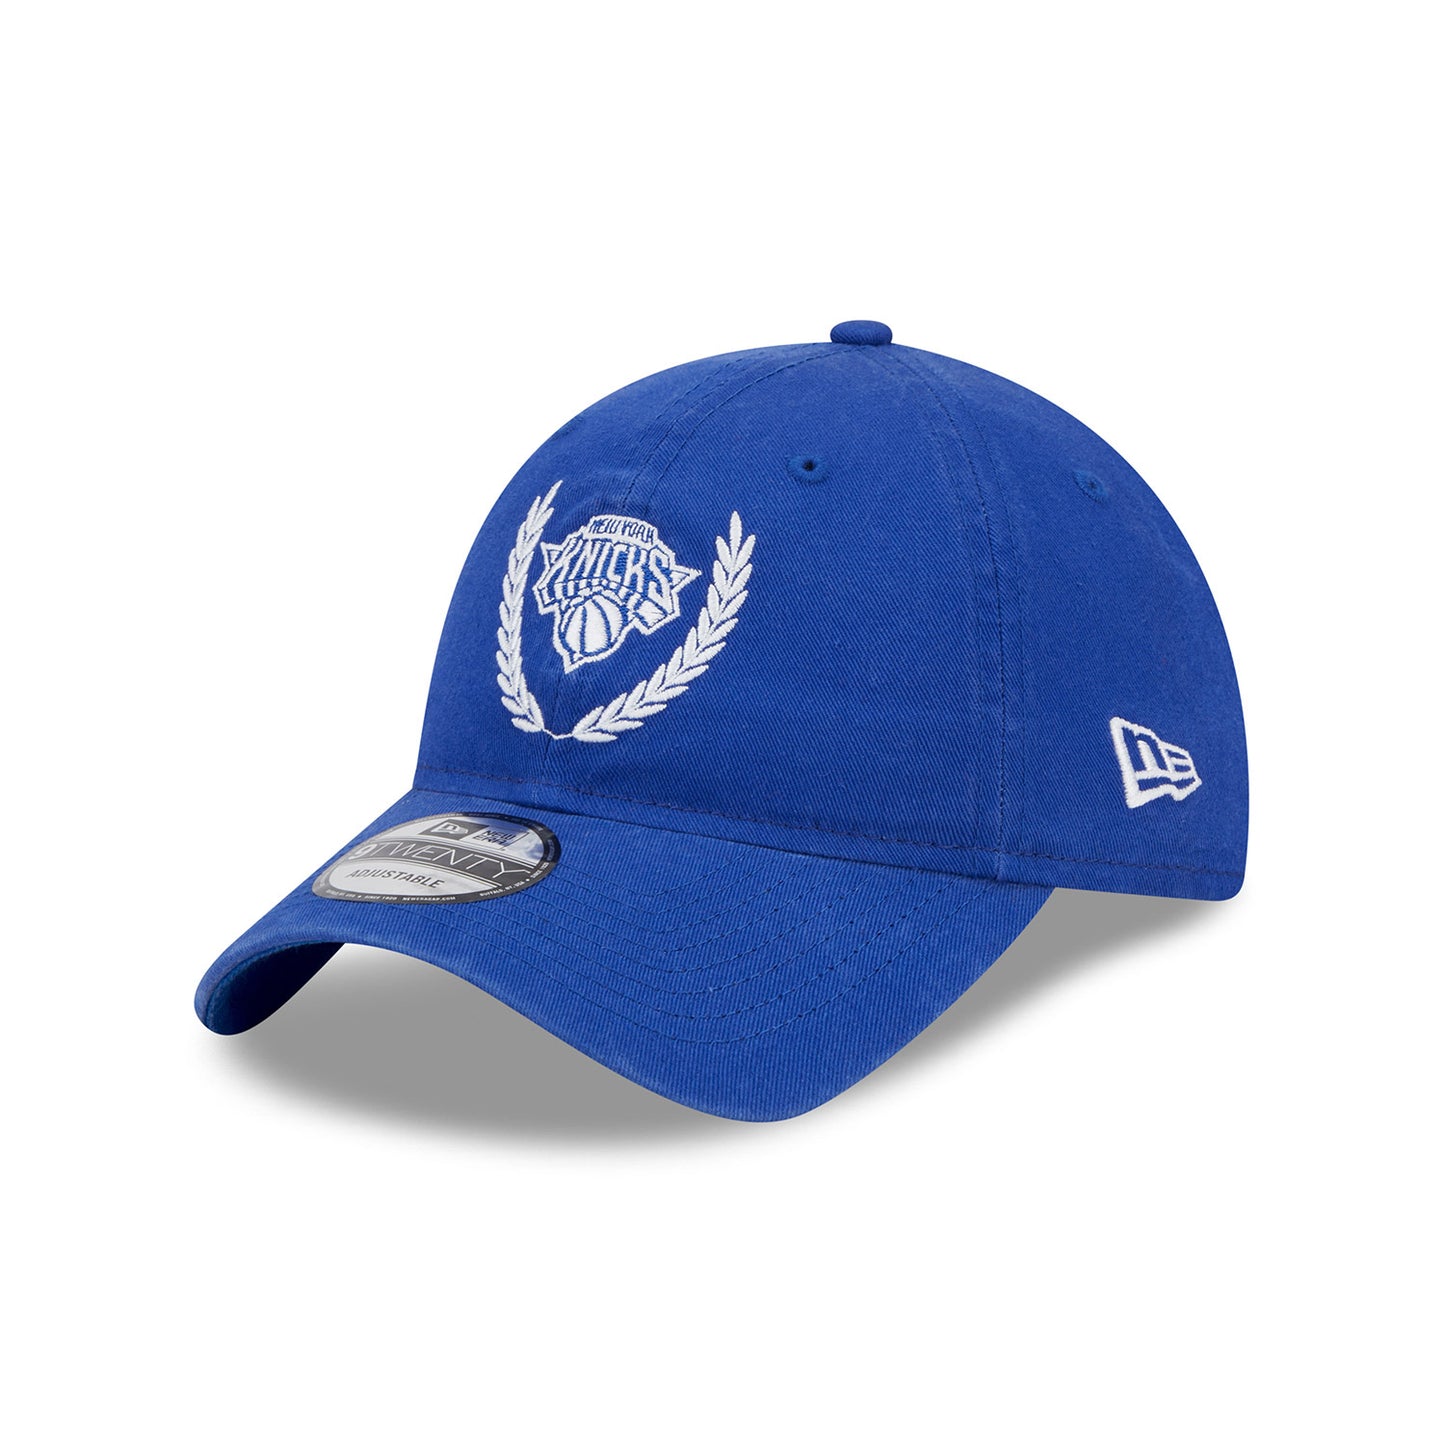 New Era Knicks Golf Royal Leaves Adjustable Hat In Blue - Angled Left Side View